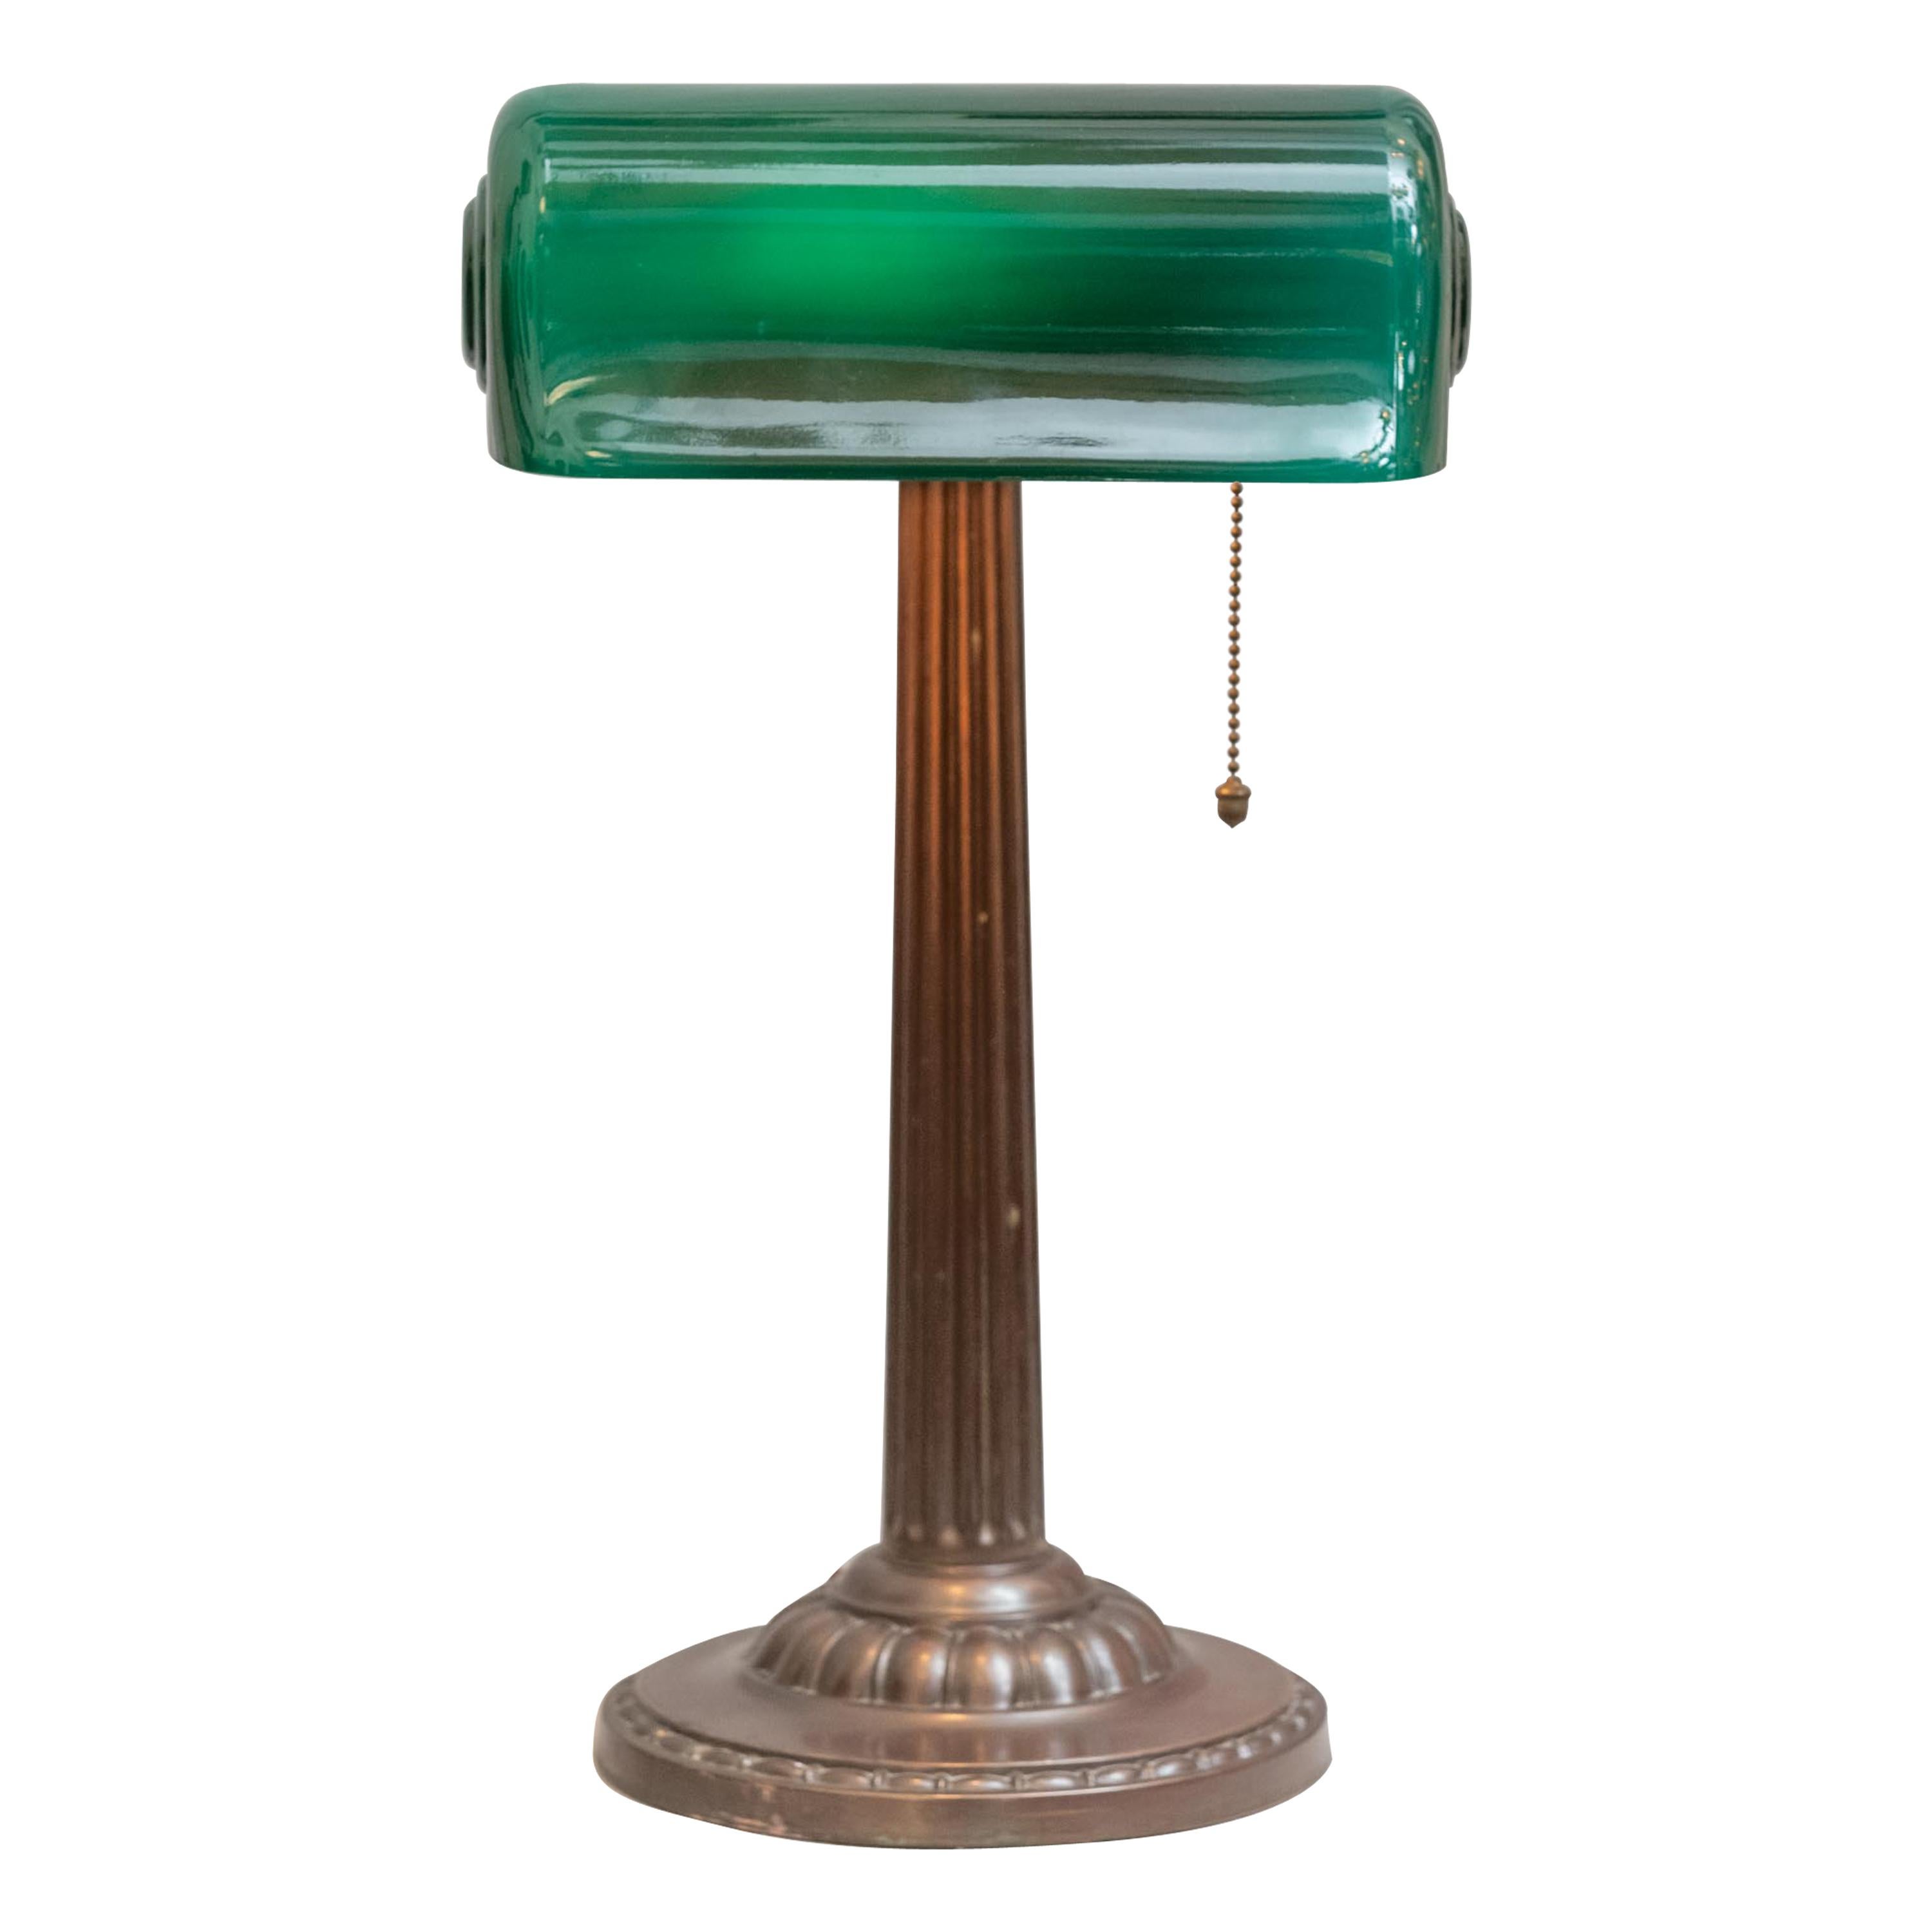 Green Shade "Banker's Desk Lamp" by Verdelite, circa 1915